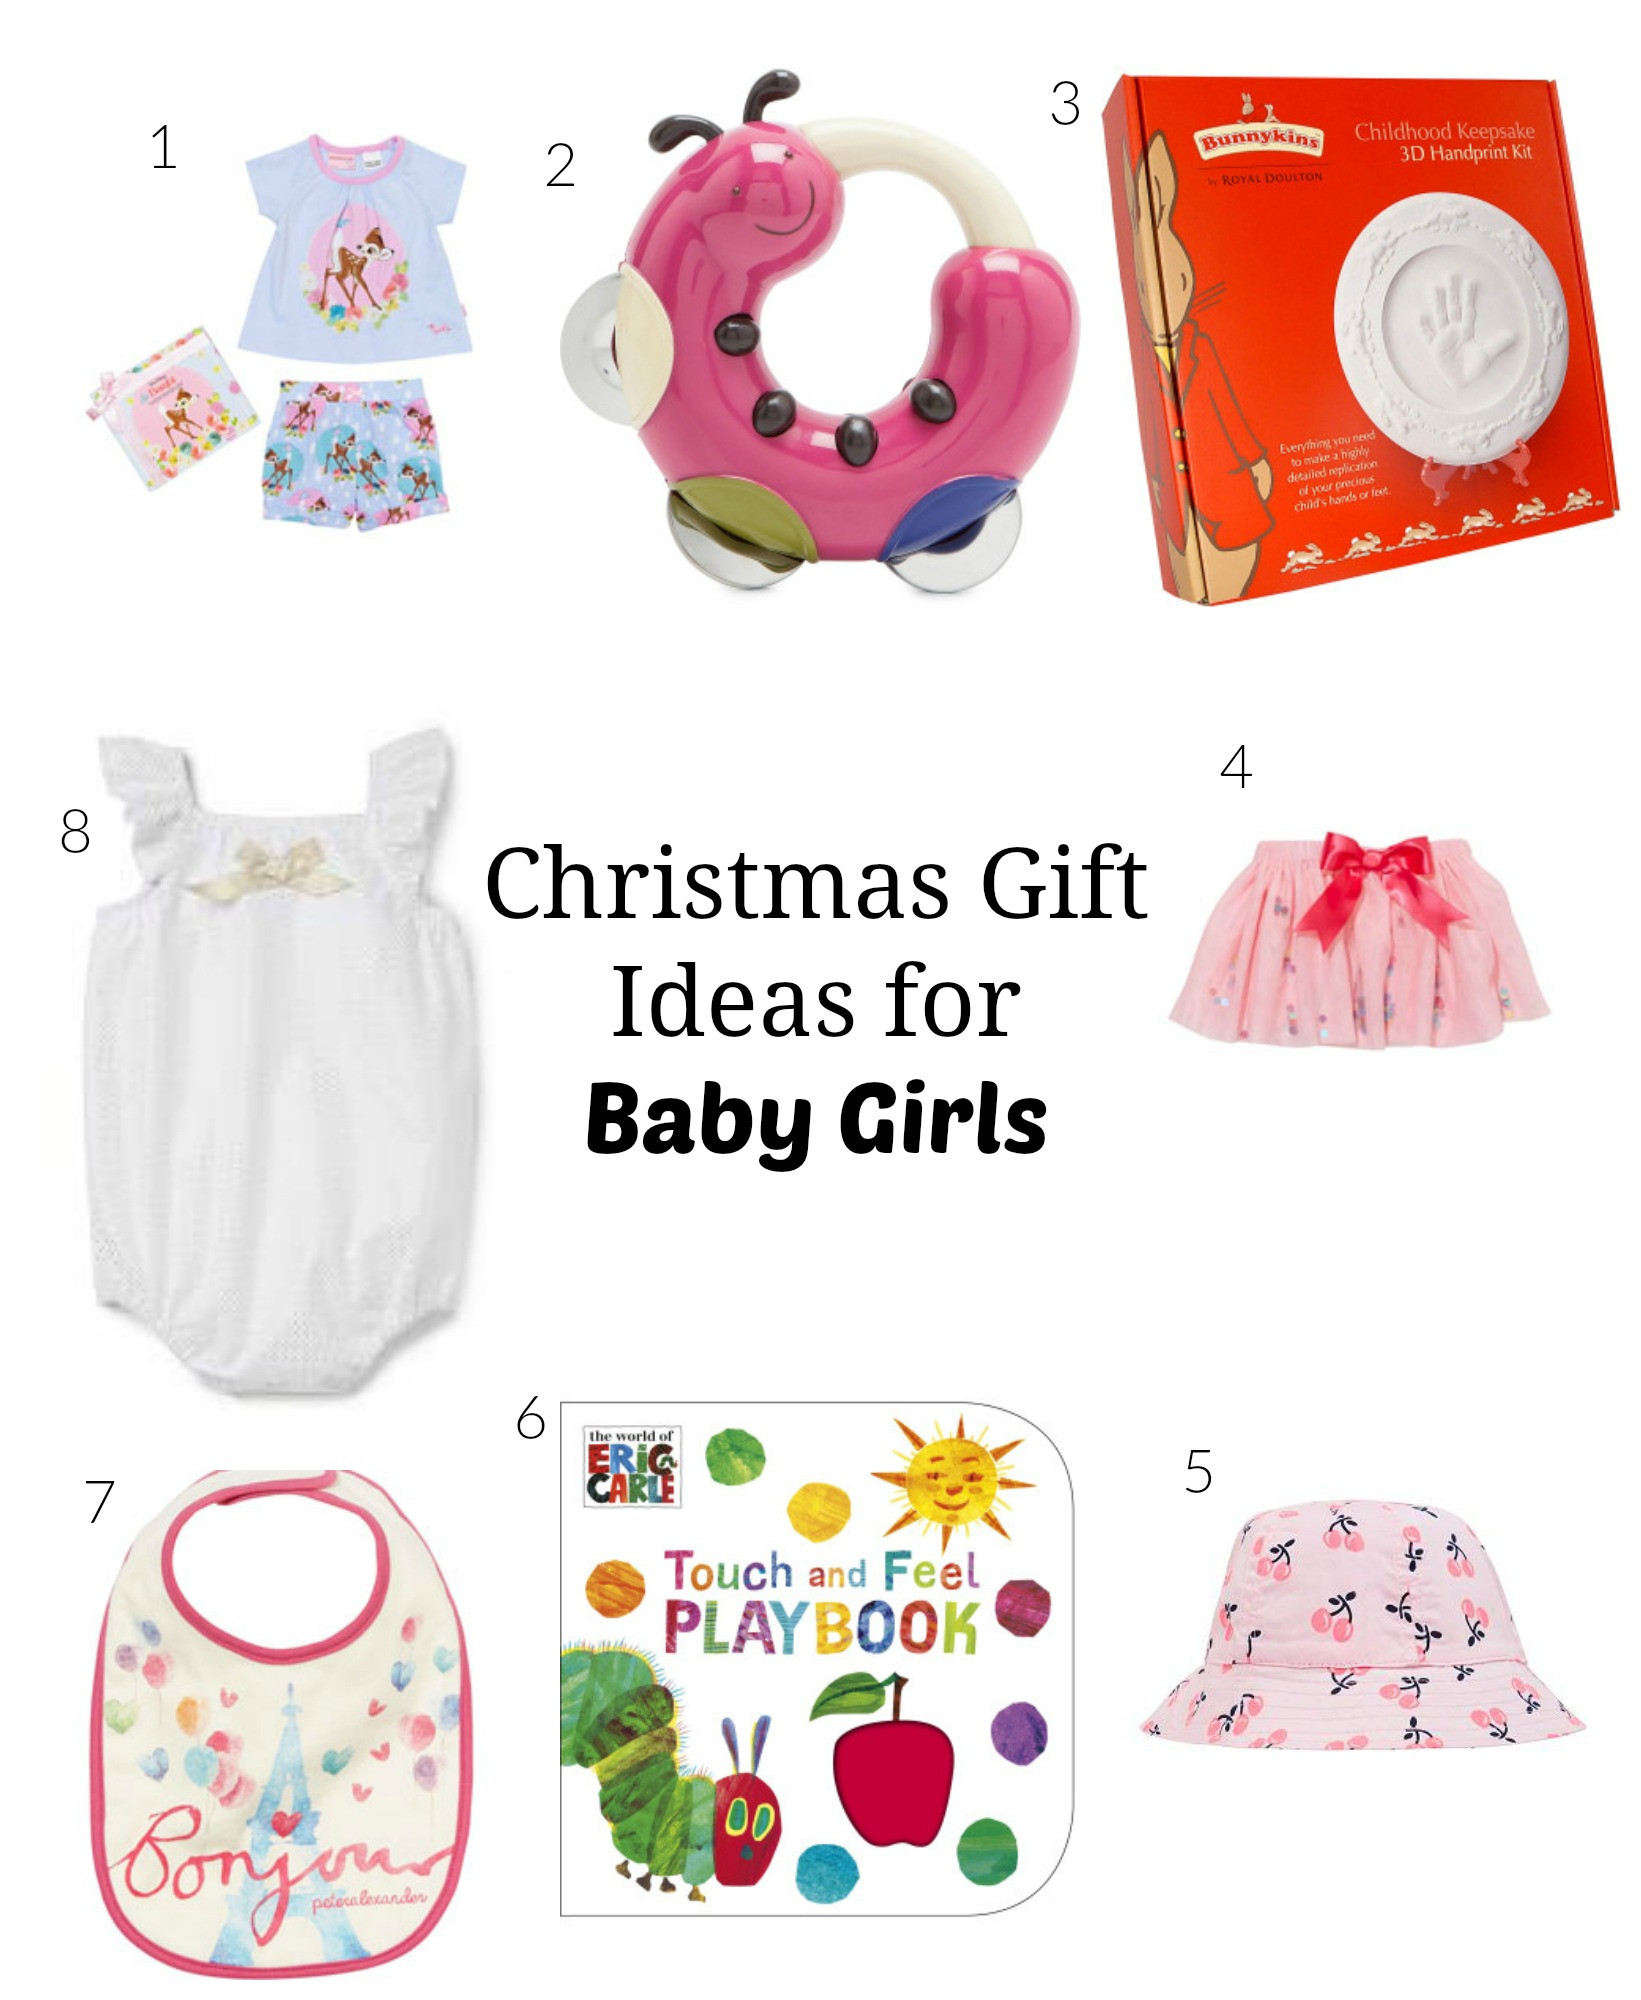 Toddler Girls Gift Ideas
 Go Ask Mum Christmas Gifts for Baby Girls Under $40 Go